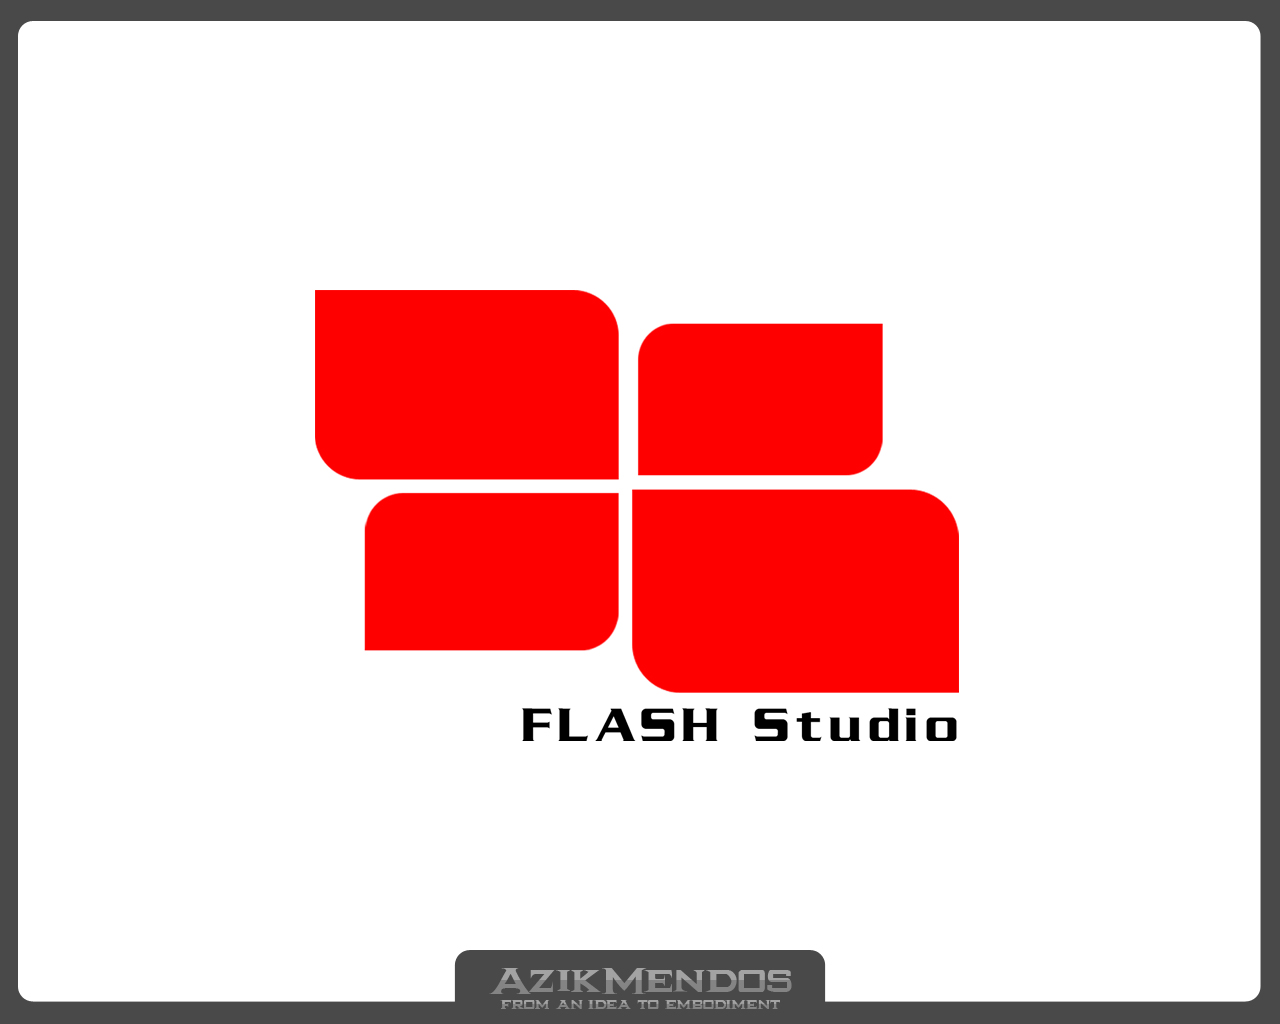 FlashStudio